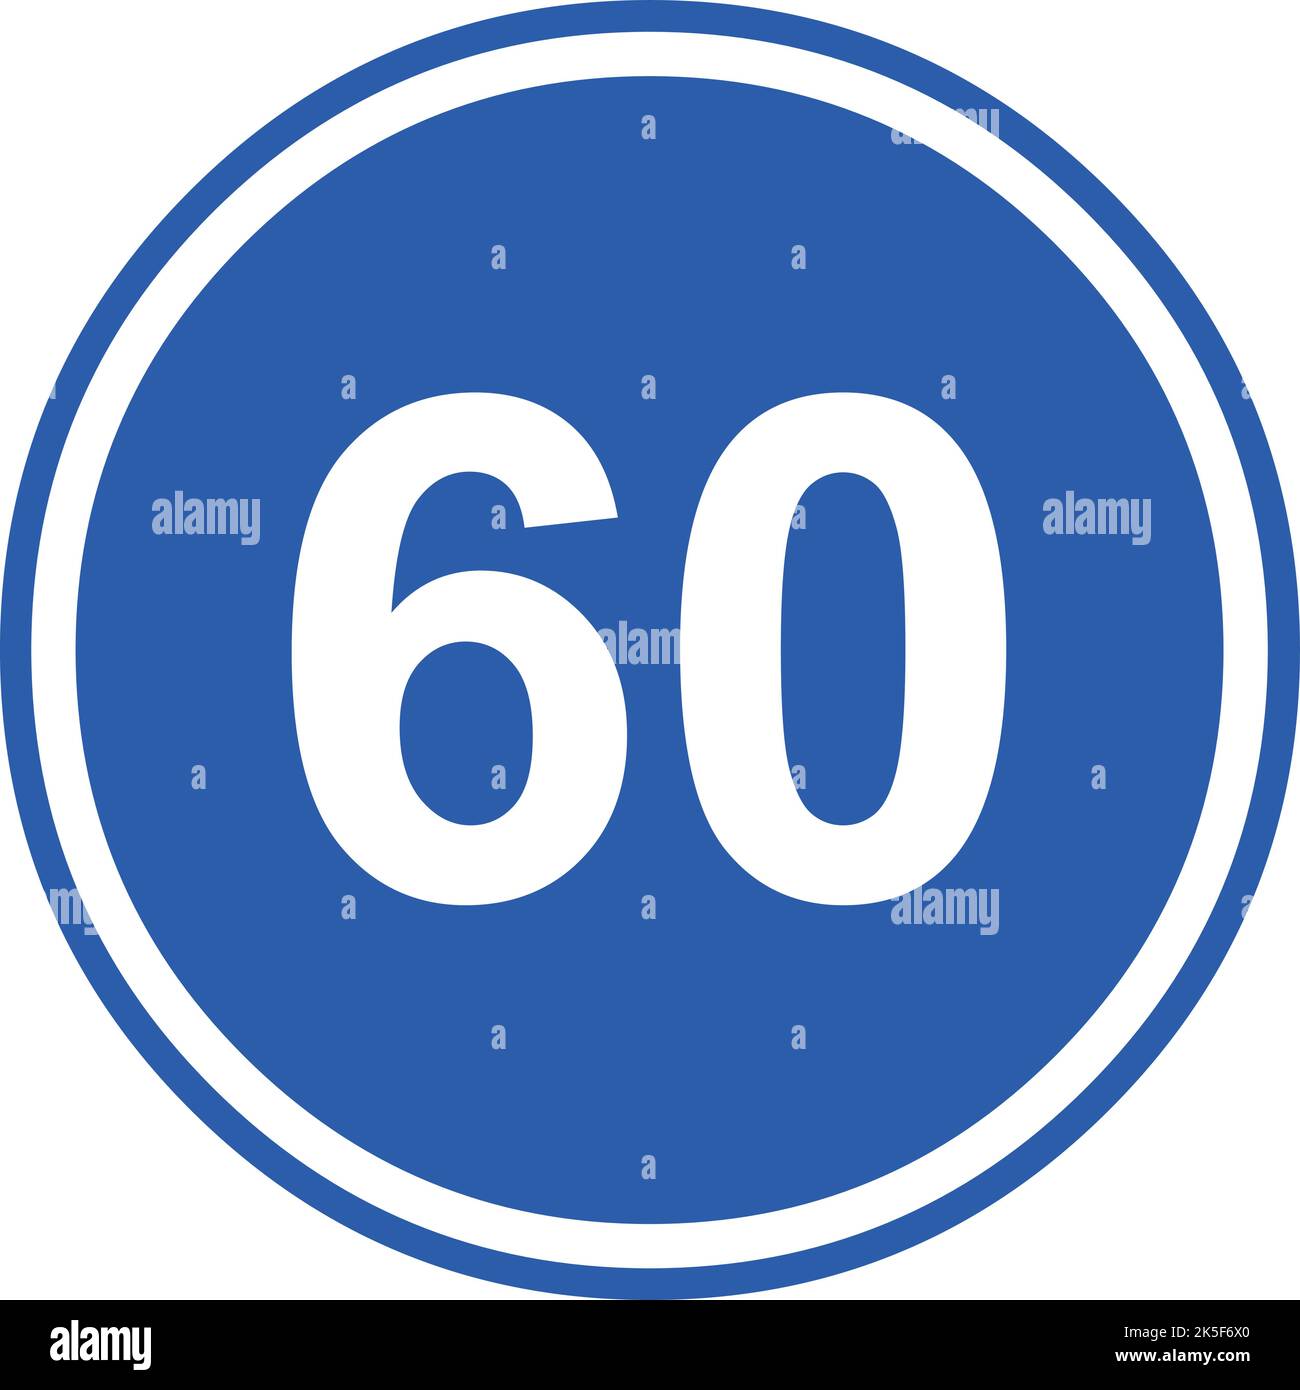 Vector illustration of minimum speed traffic sign, 60 kmh (sixty kilometers per hour) Stock Vector